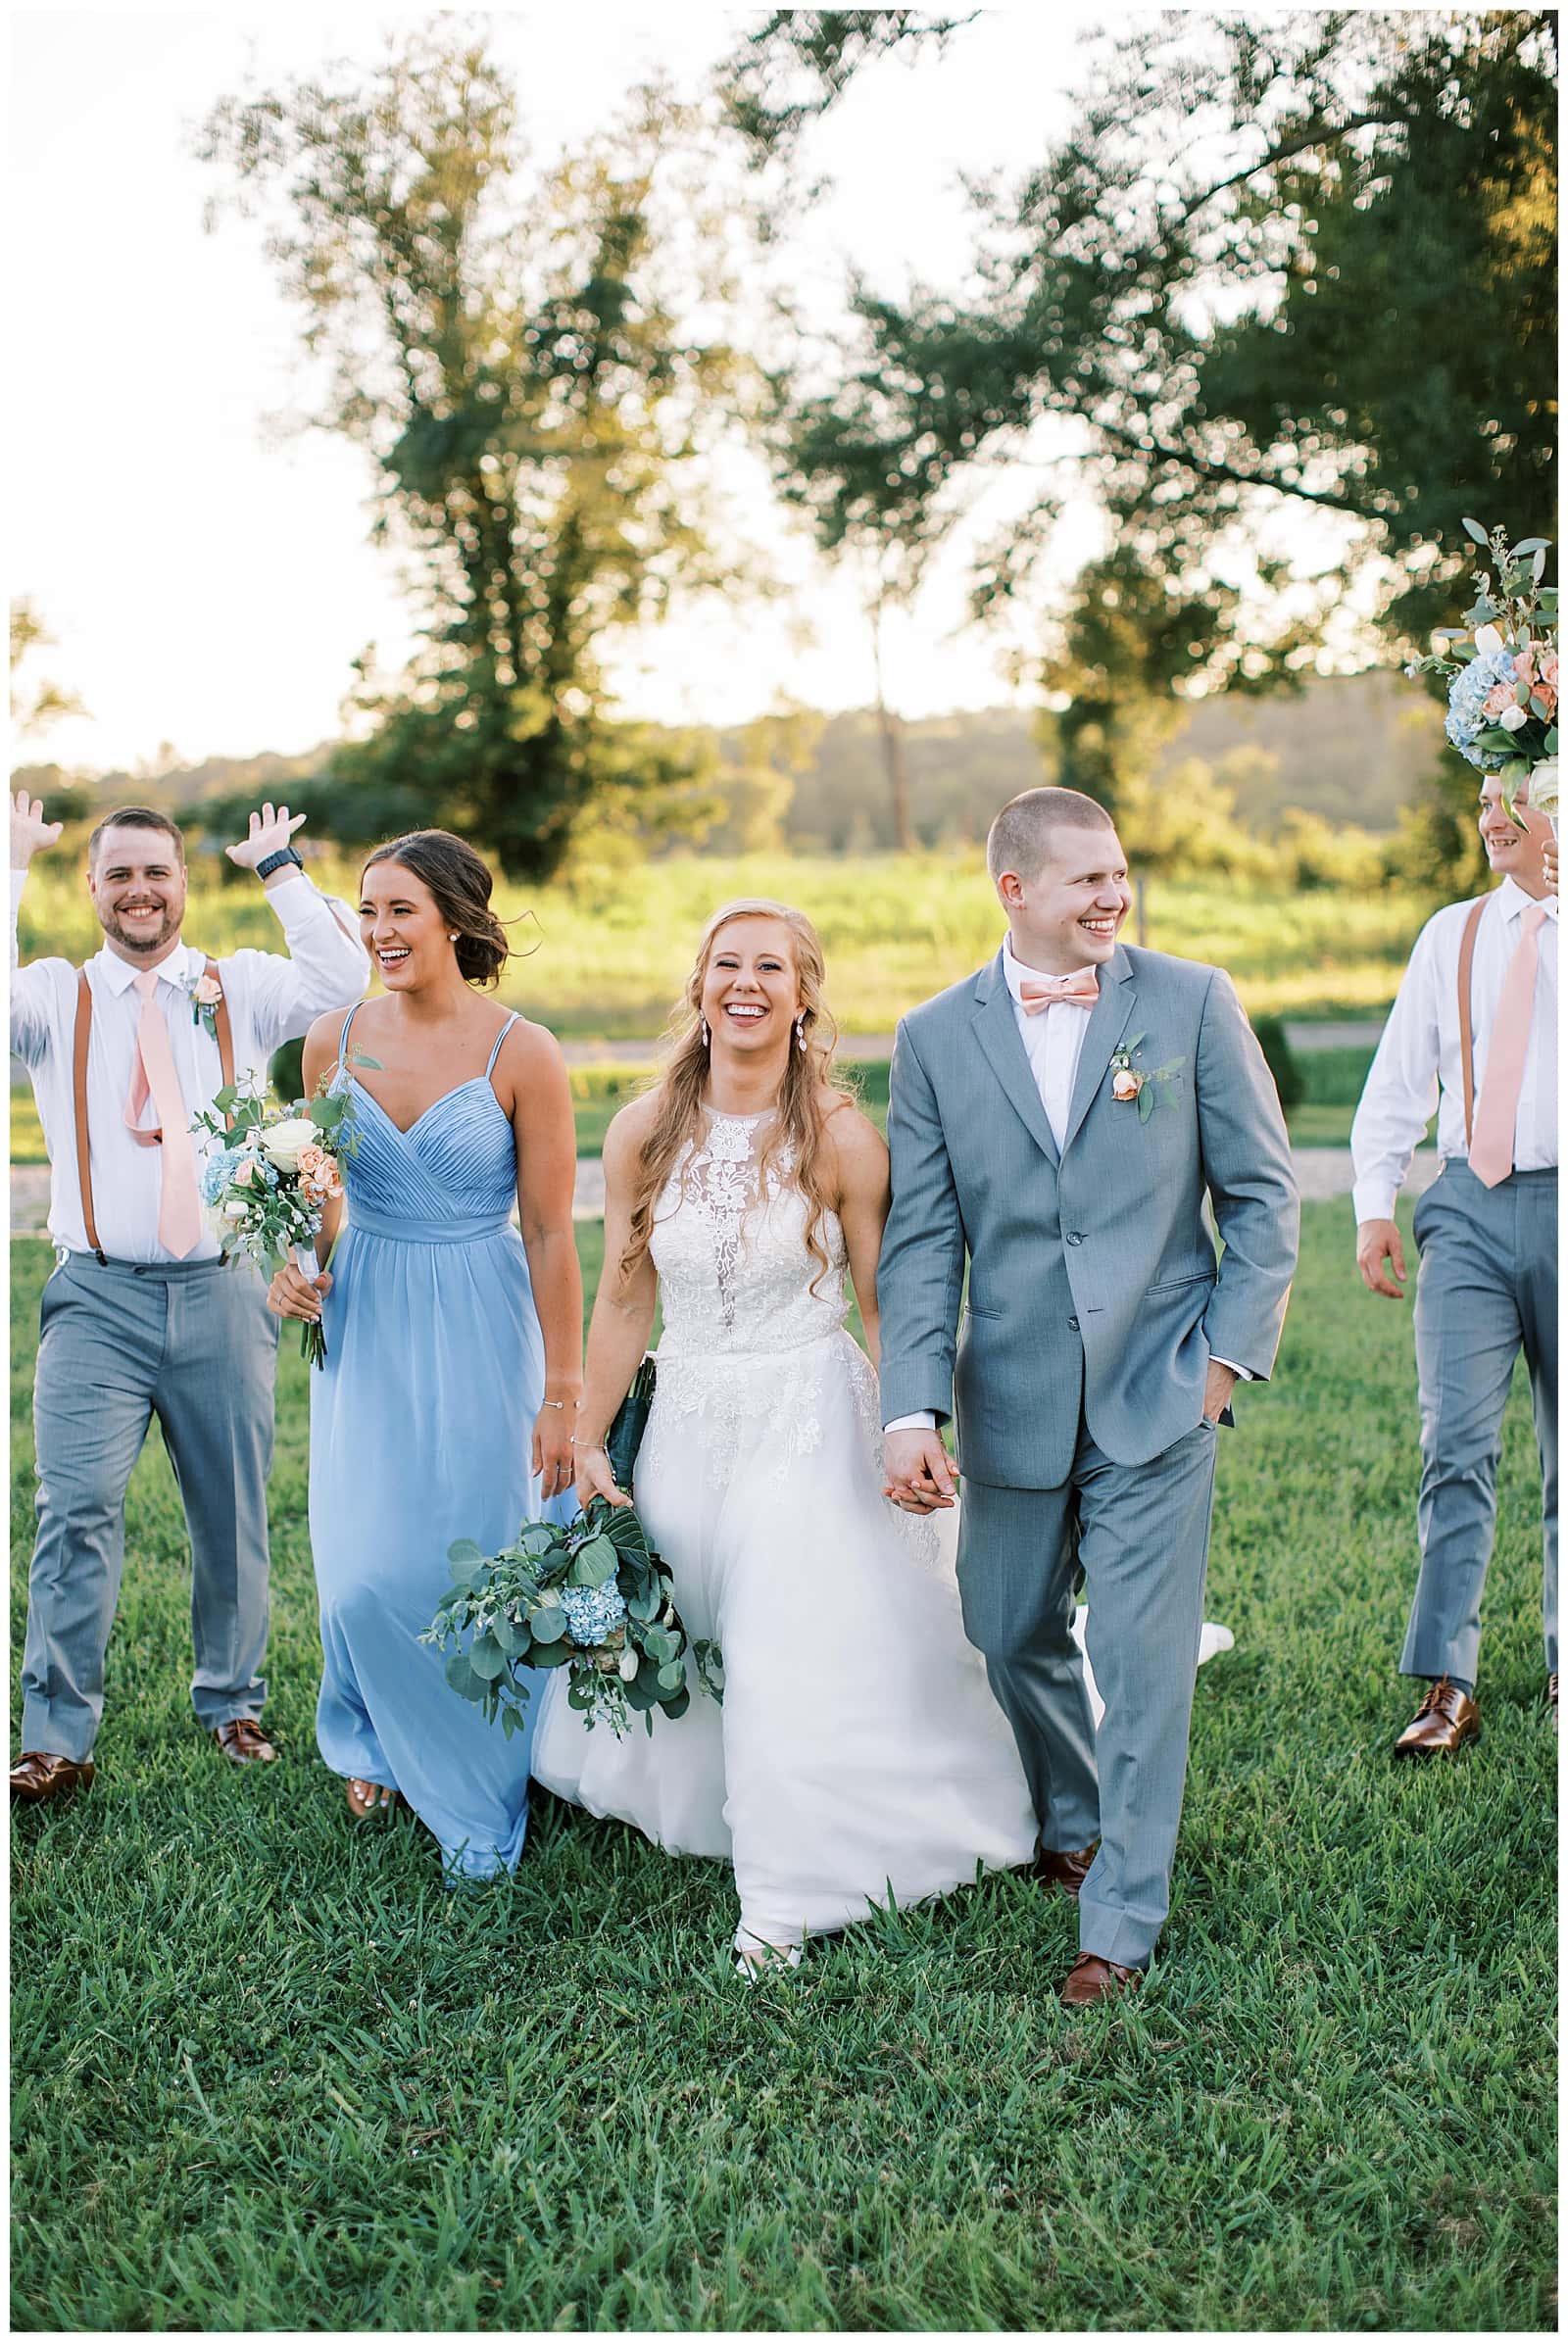 Danielle-Defayette-Photography-Farm-at-Bentley-Fields-Wedding-2020_0042.jpg